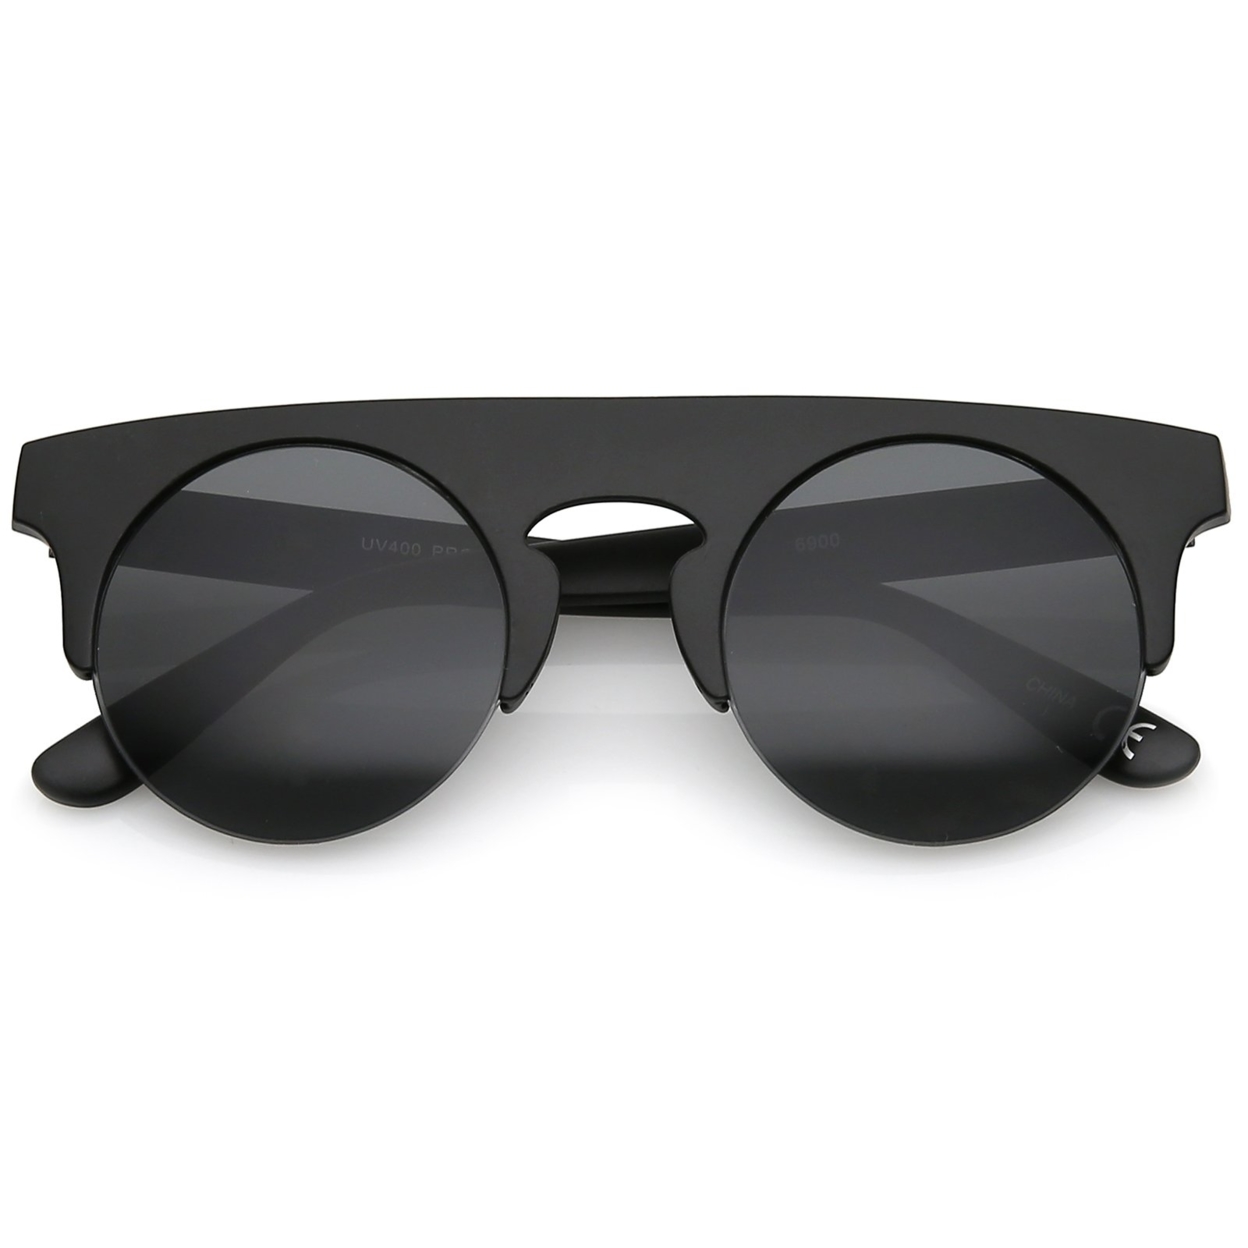 Modern Flat Top Horn Rimmed Round Flat Lens Semi Rimless Sunglasses 48mm - Black / Purple Mirror